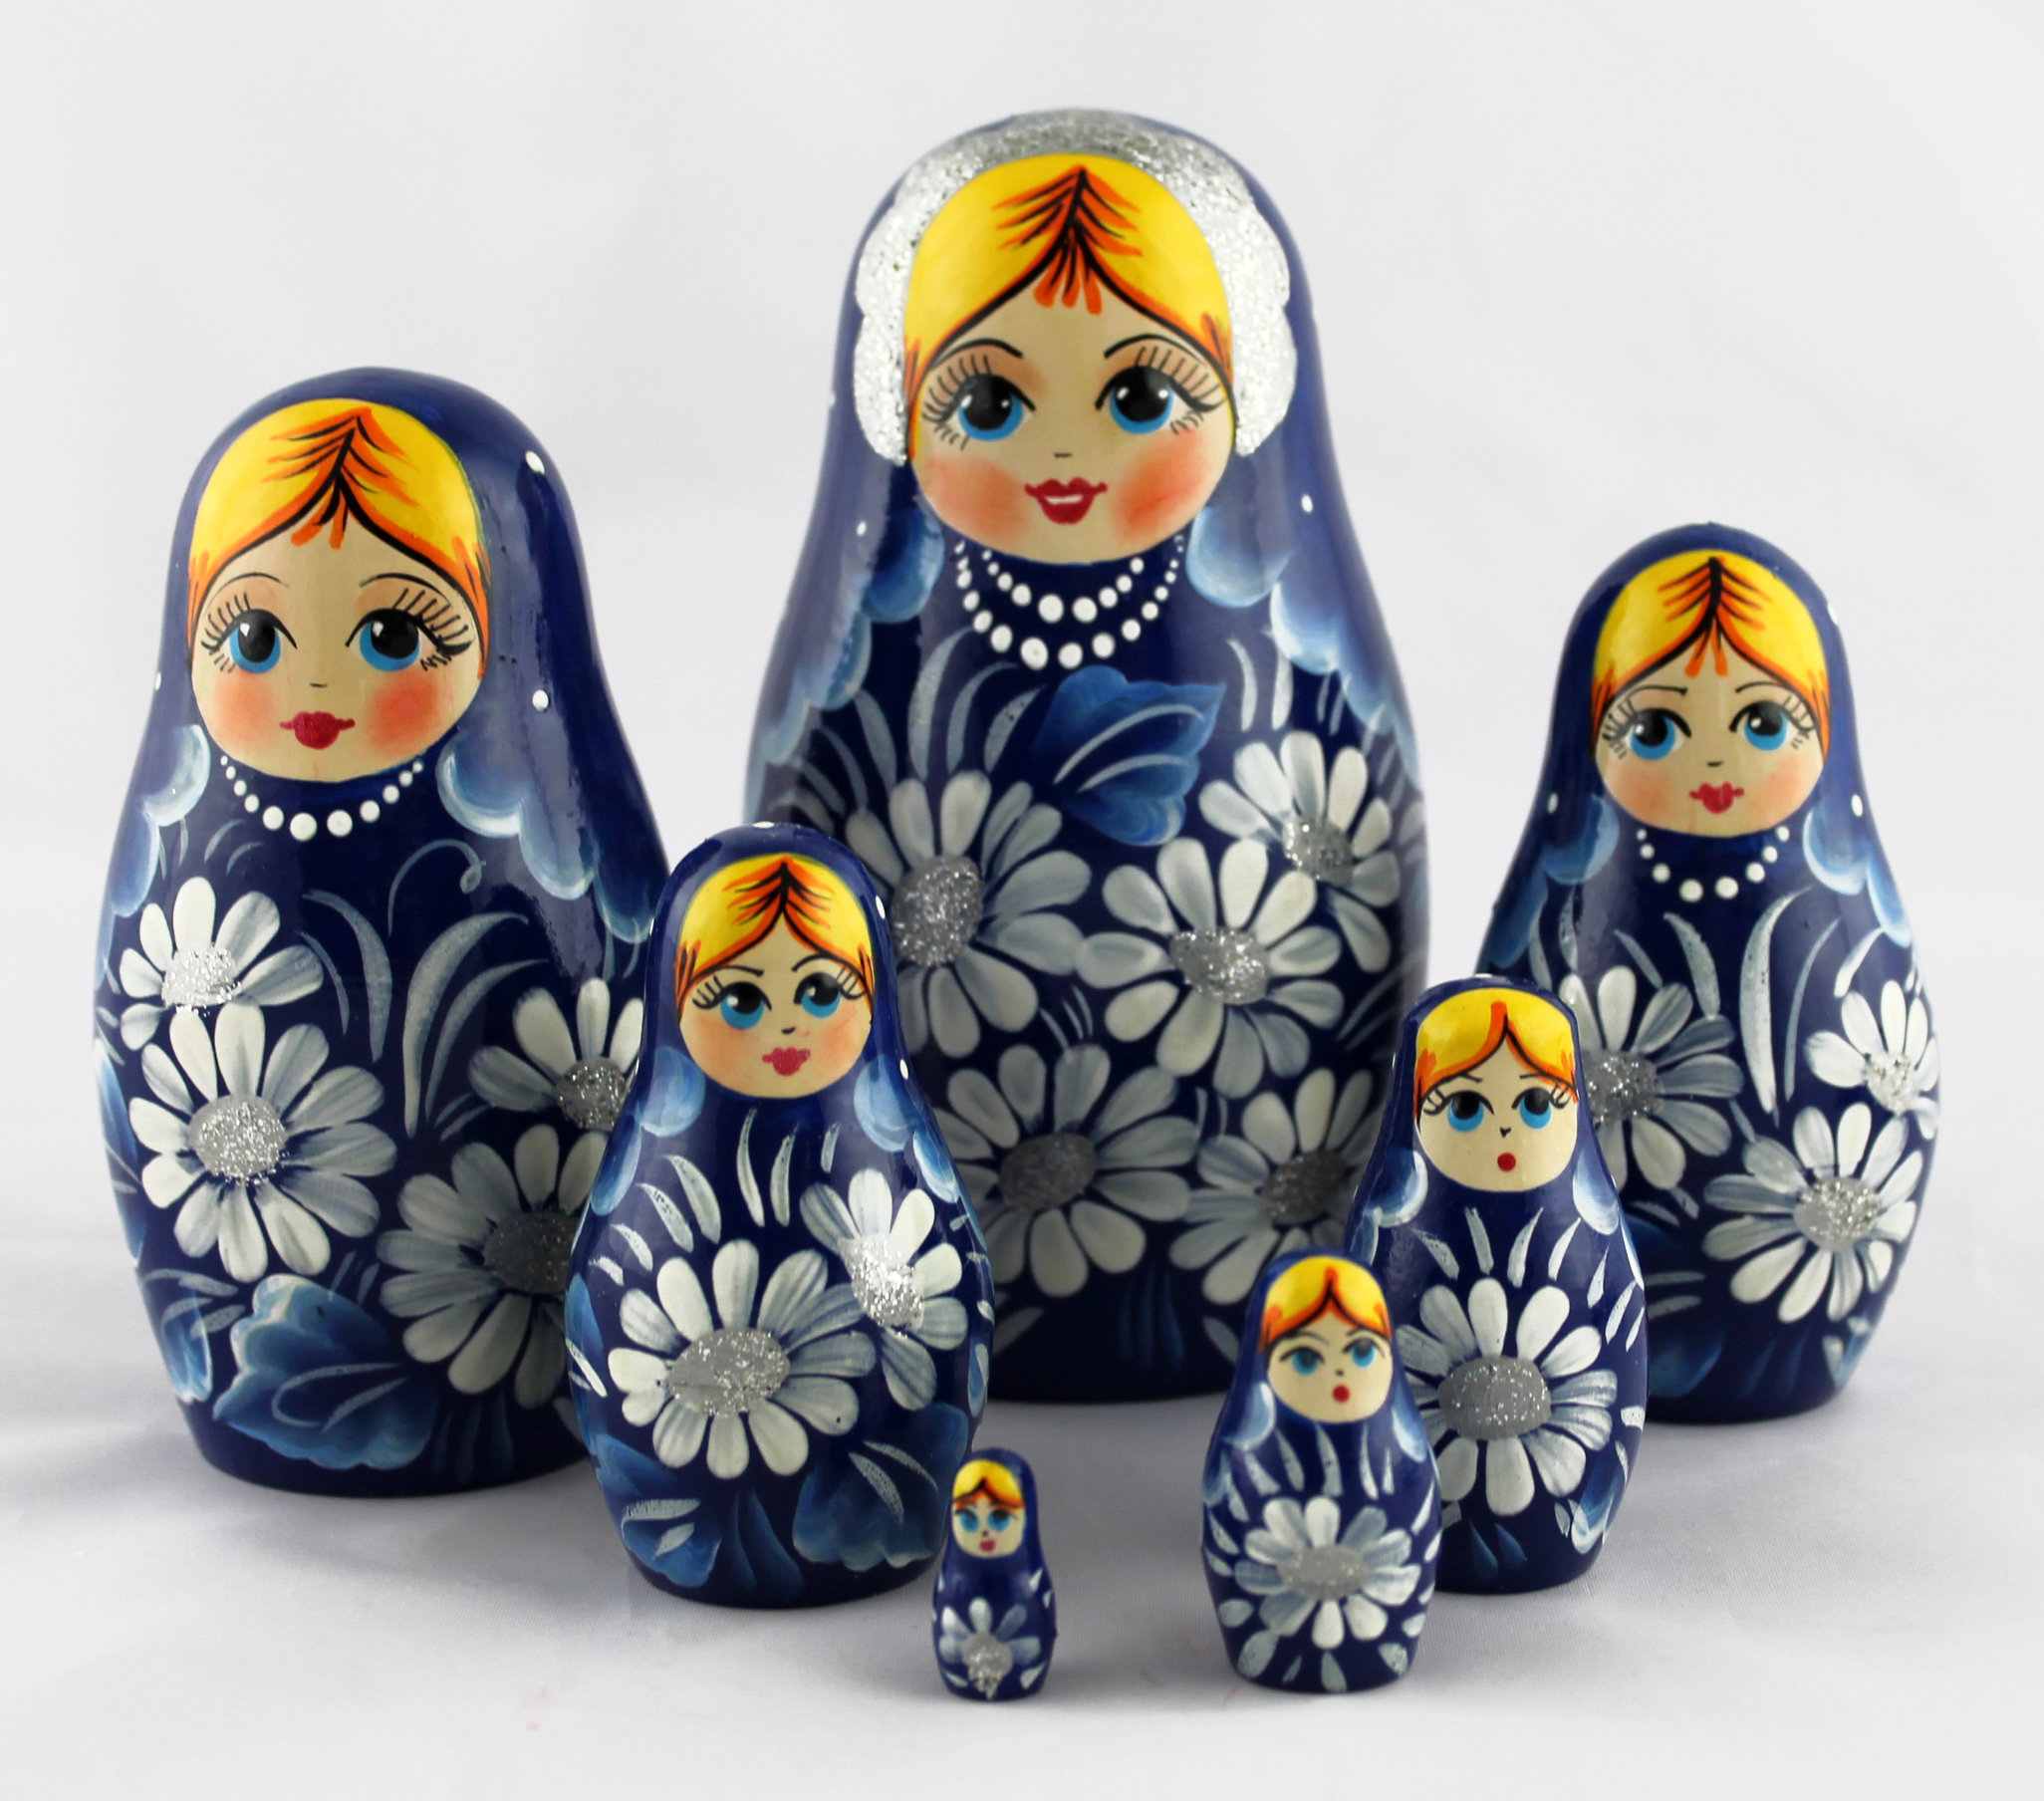 Blue Decor Russian Matryoshka Dolls Set of 7 pcs Hand Painted Russian Dolls Nesting Dolls Russian Dolls in Sarafan Dress with Chamomile Flowers 